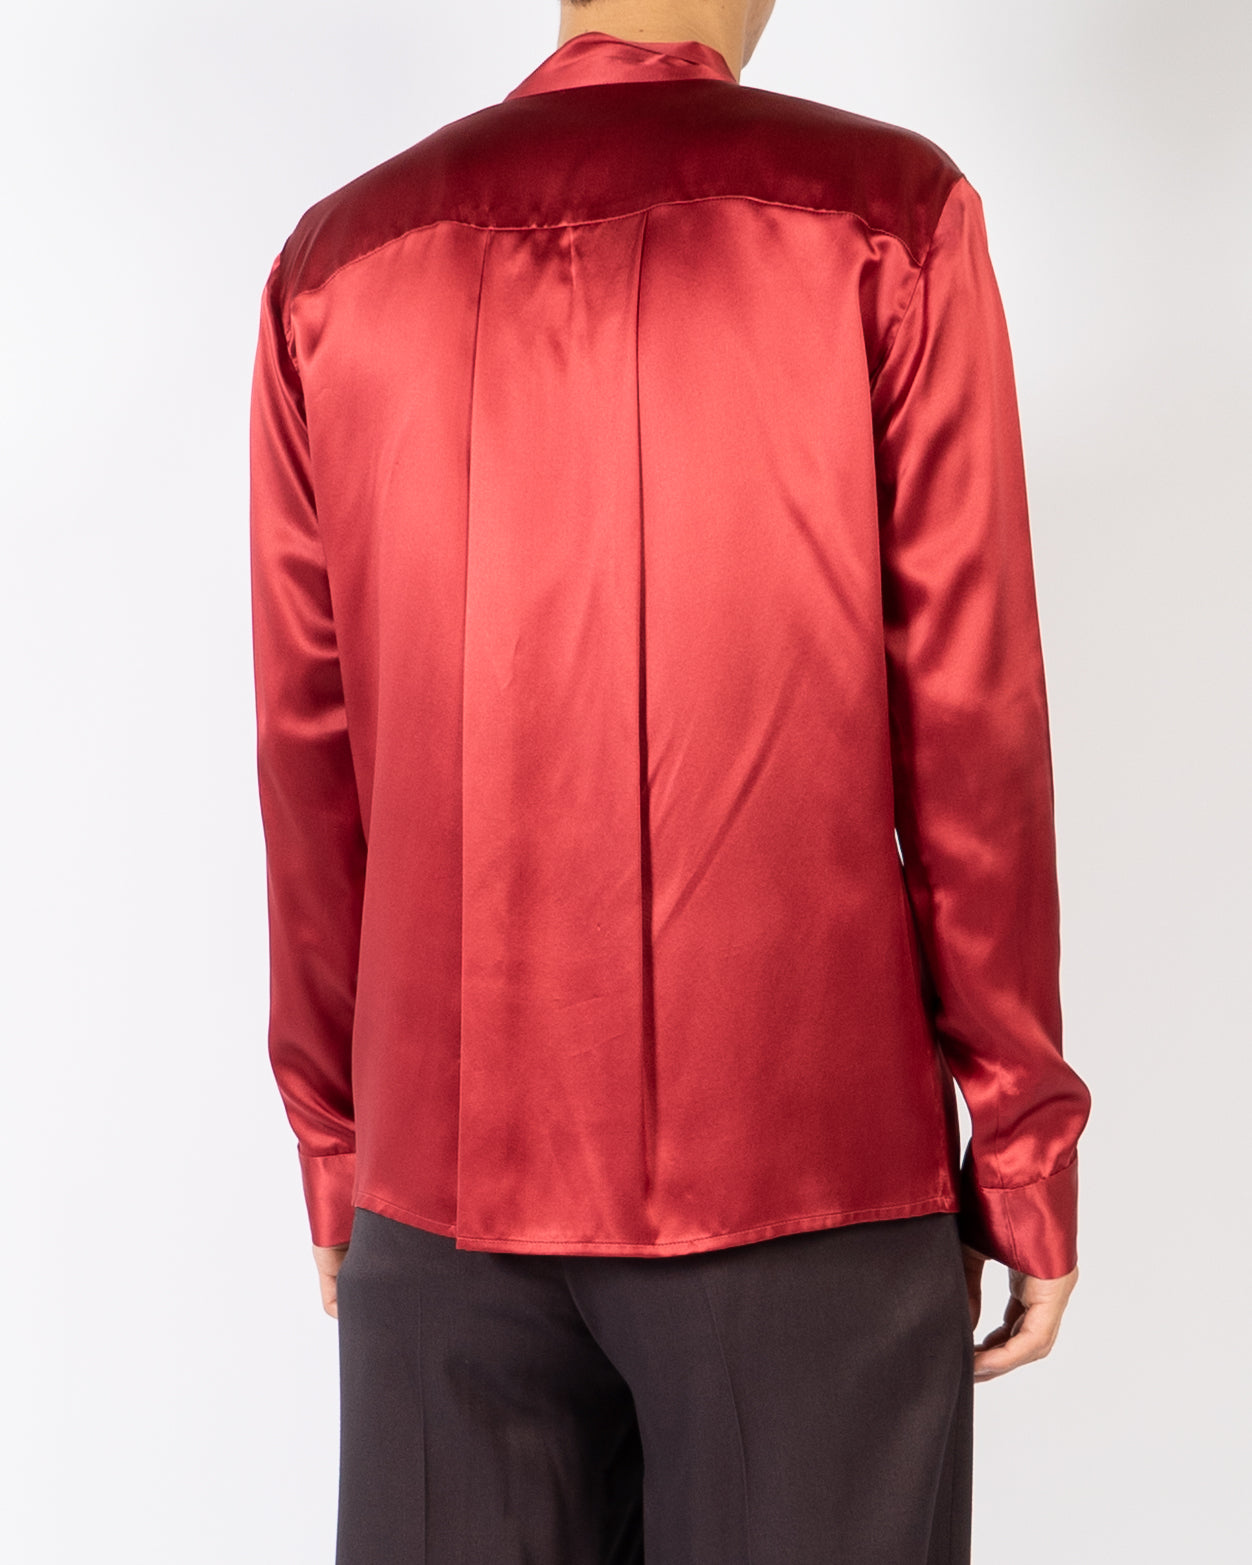 FW18 Red Silk Scarf – Collar Shirt Backyardarchive